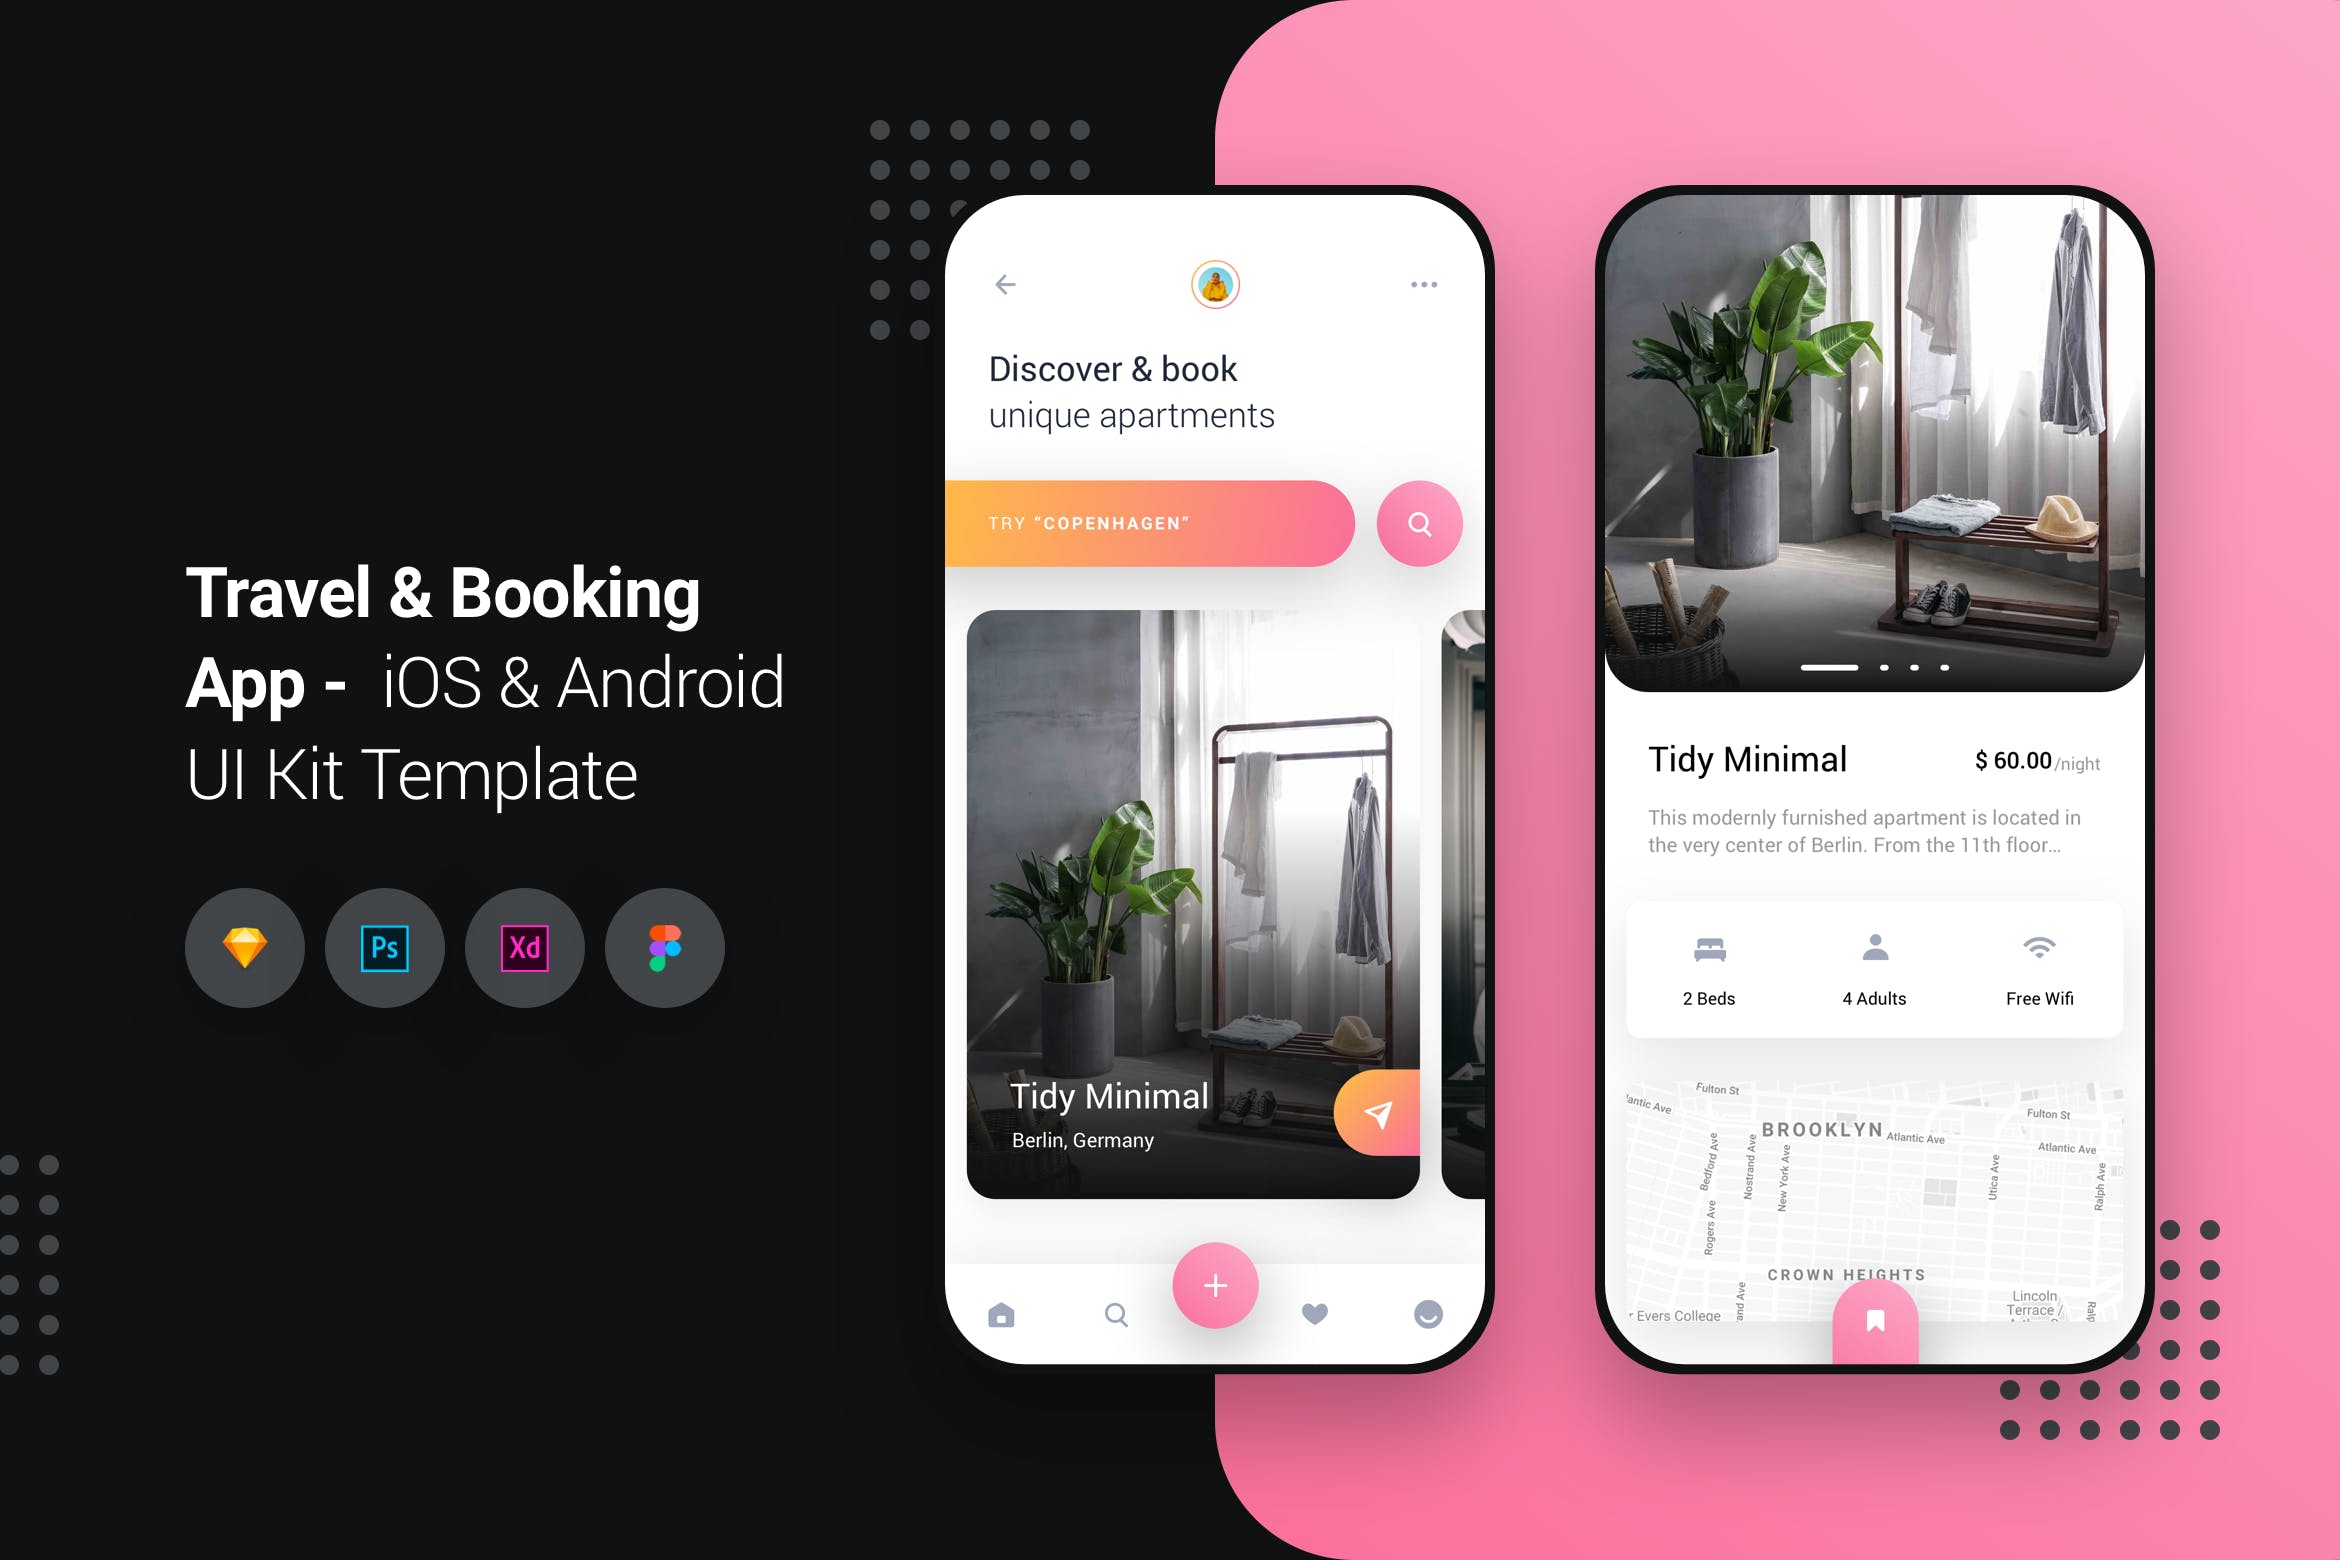 旅游酒店民宿预订iOS&Android手机APP应用UI设计套件 Travel & Booking App iOS & Android UI Kit Template插图